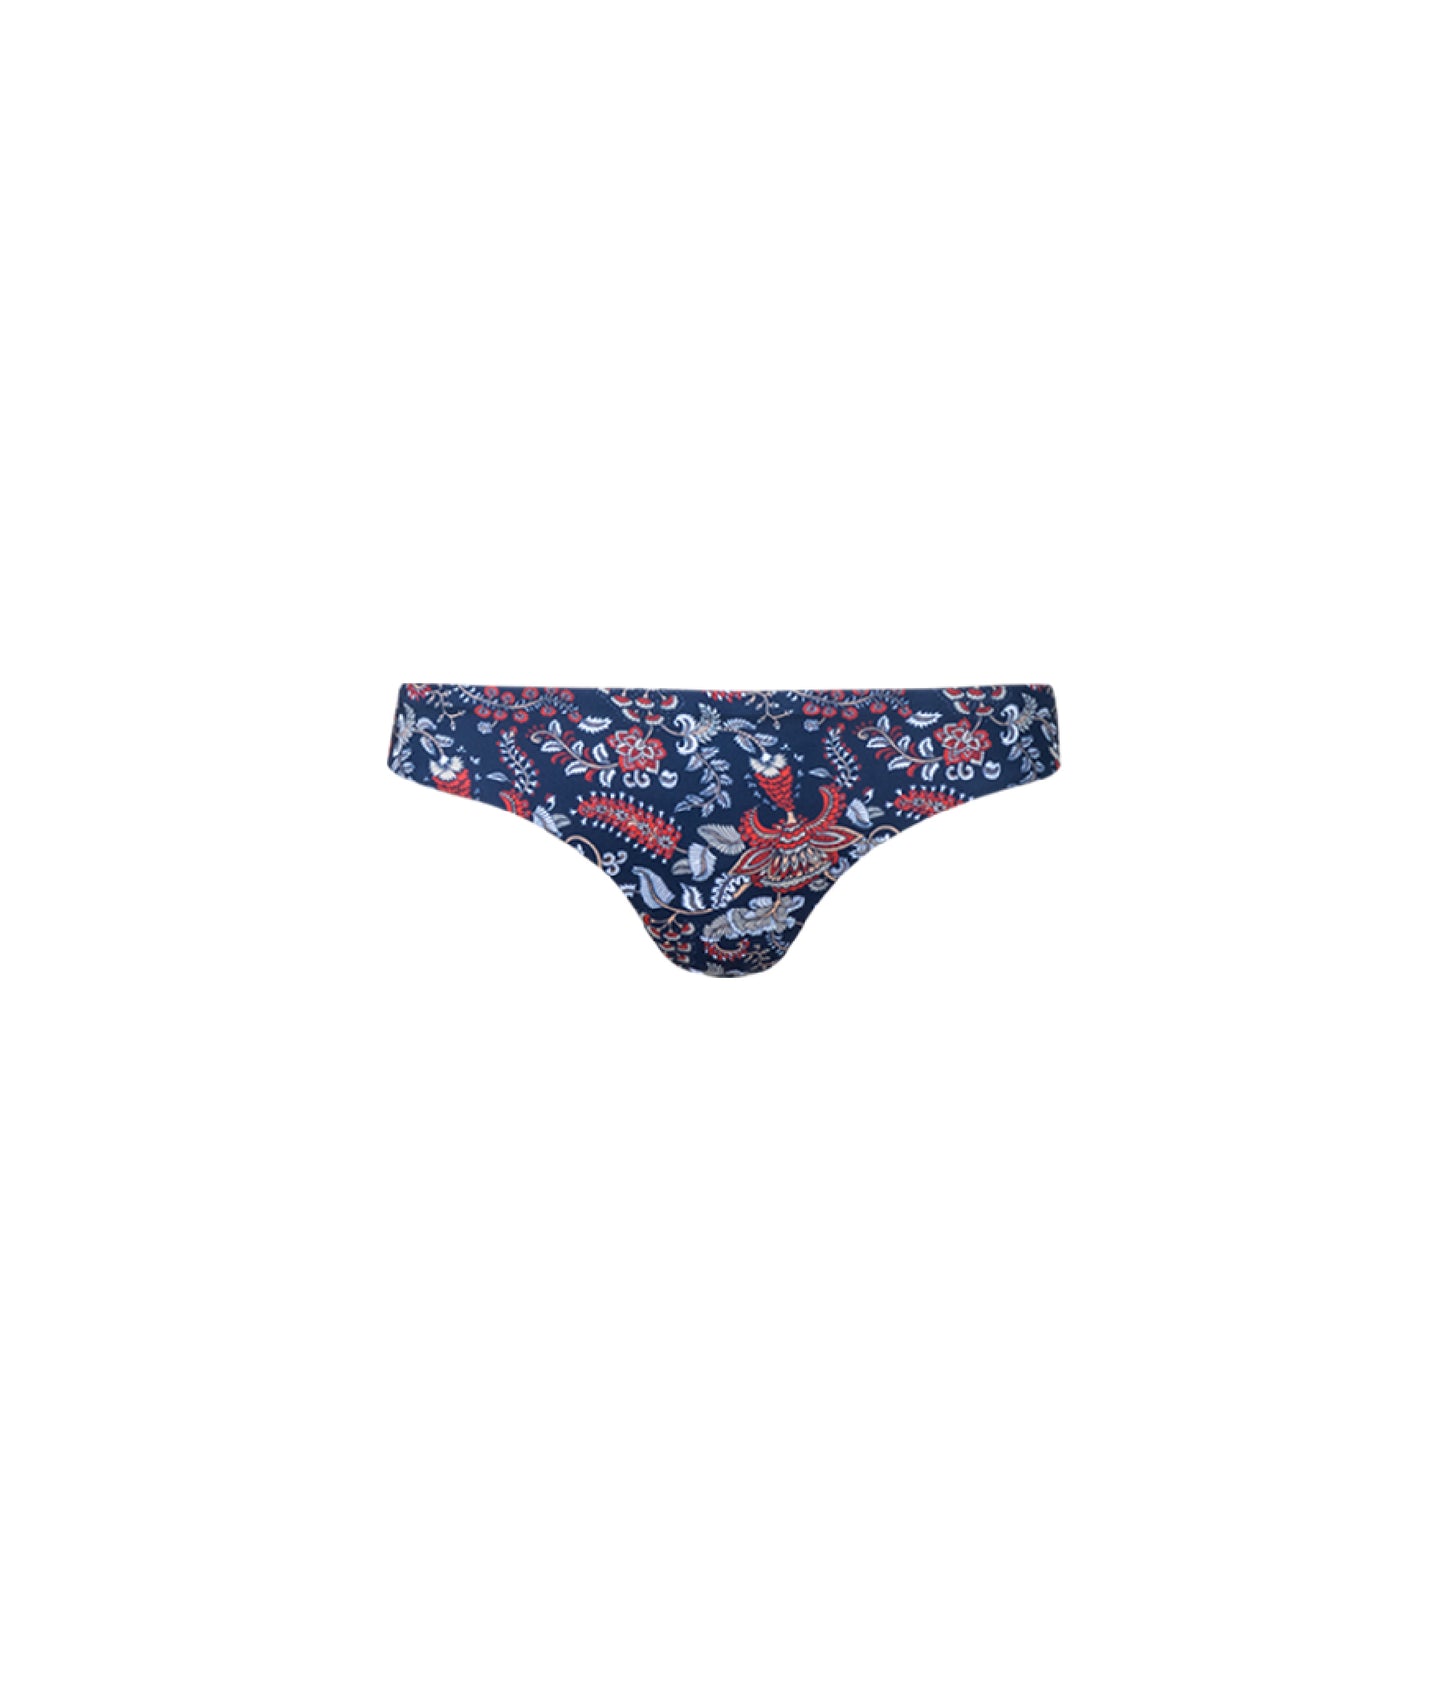 Verdelimon - Bikini Bottom - Tunas - Printed - Blue Floral - Front